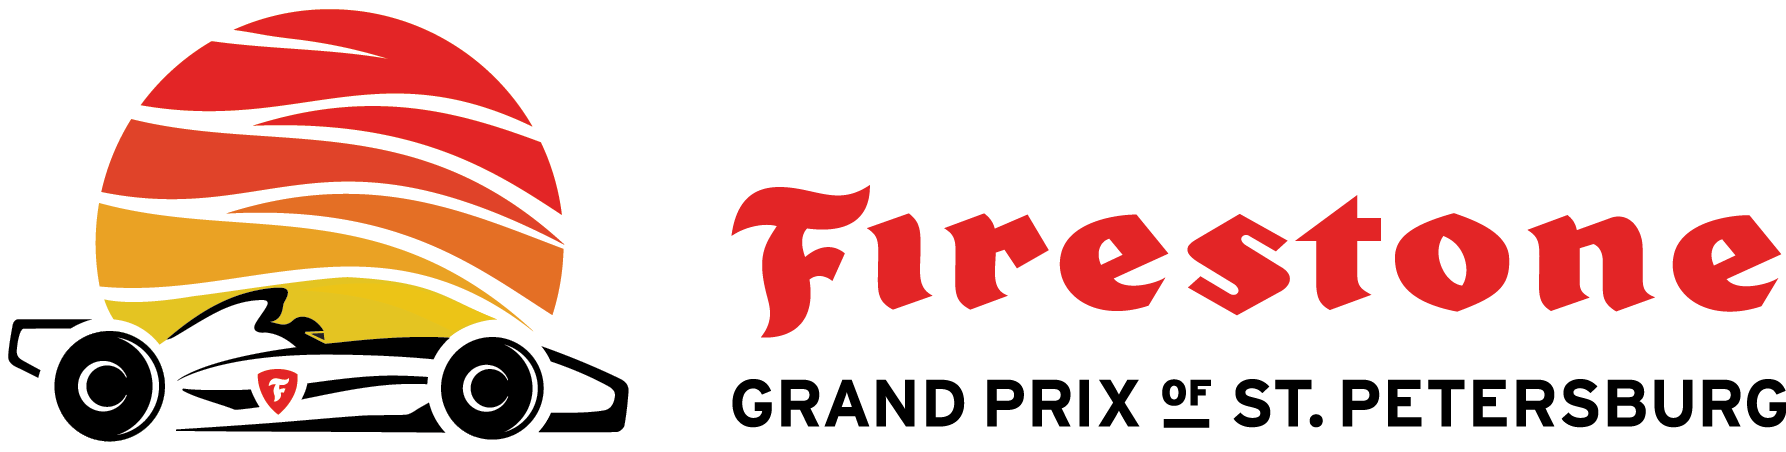 St. Petersburg Logo - Firestone Grand Prix of St. Petersburg - Home